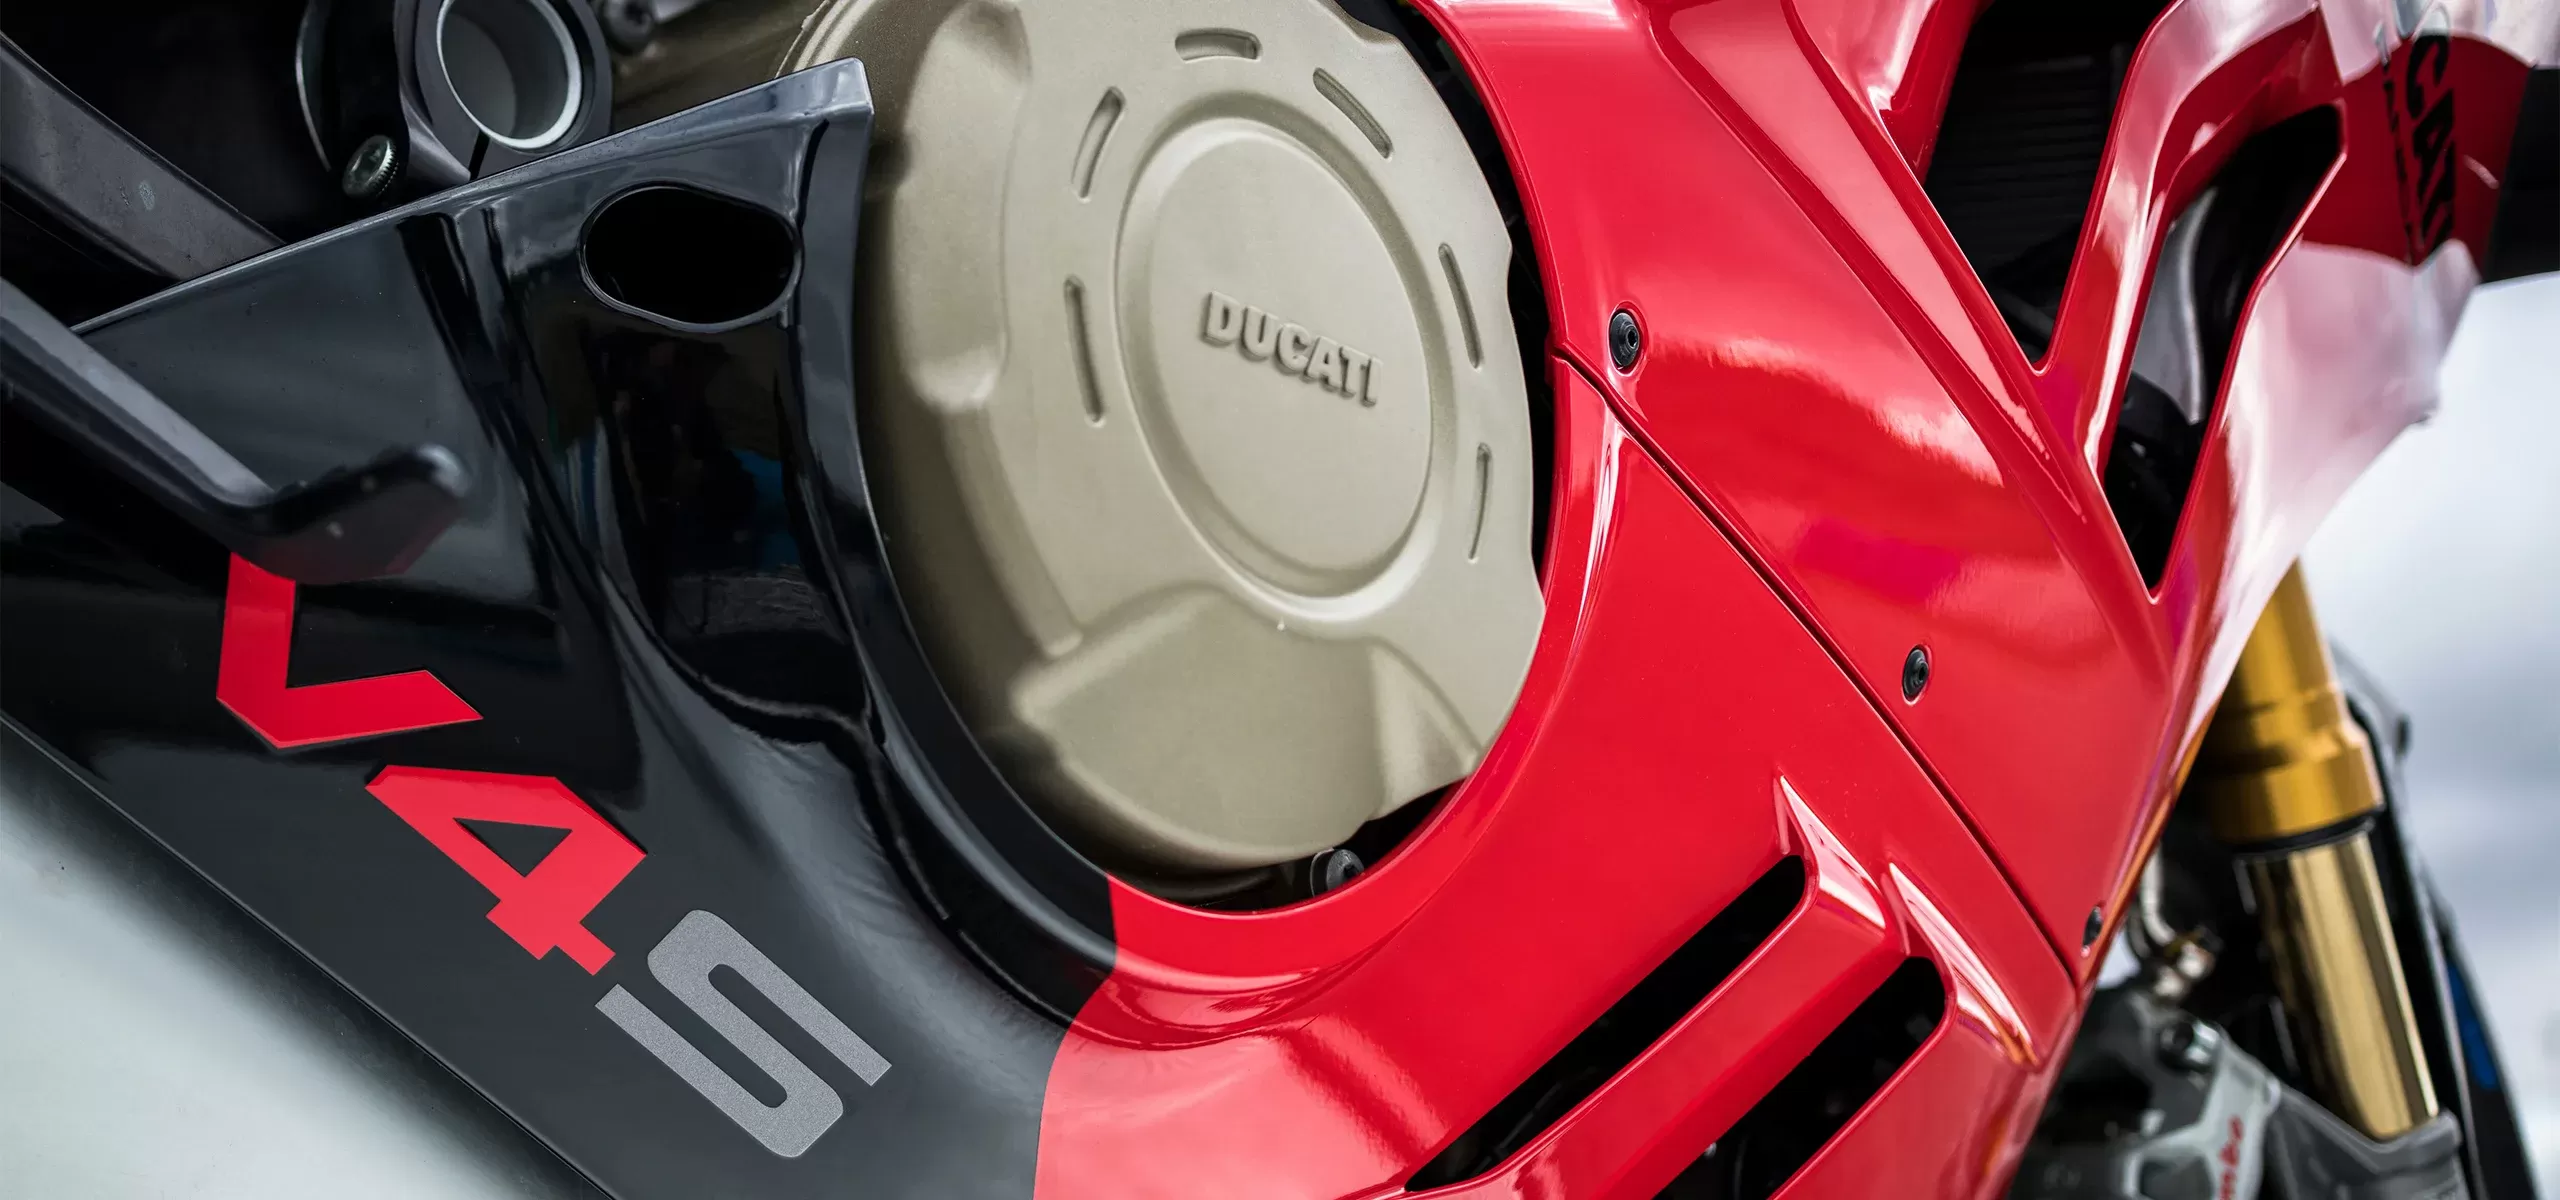 Ducati Recalls